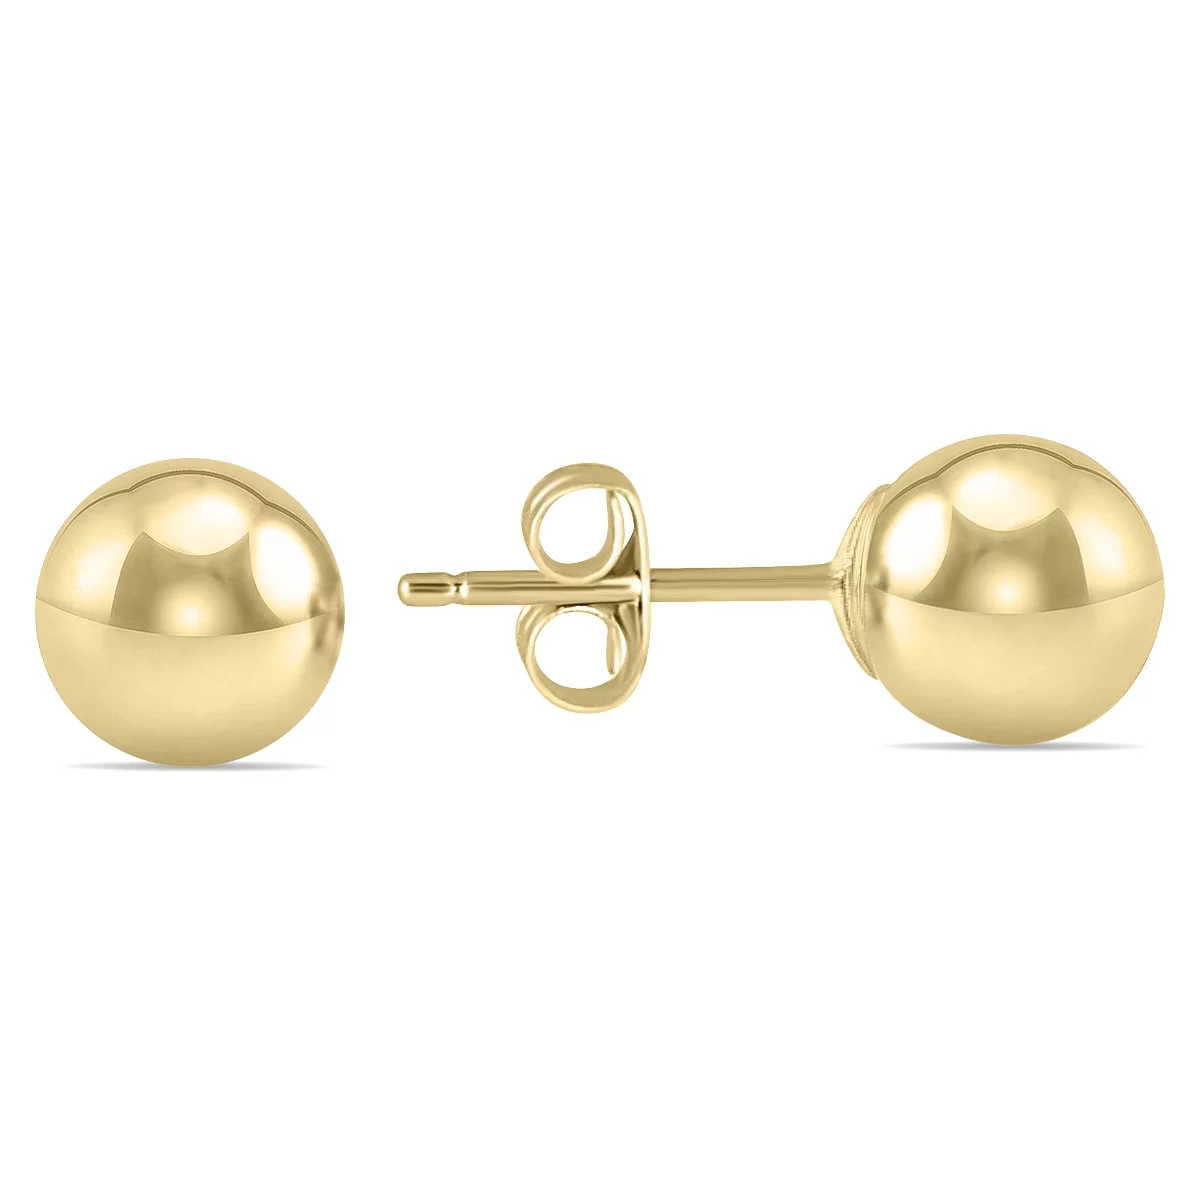 SZUL Women's 6MM 14K Yellow Gold Filled Round Ball Earrings